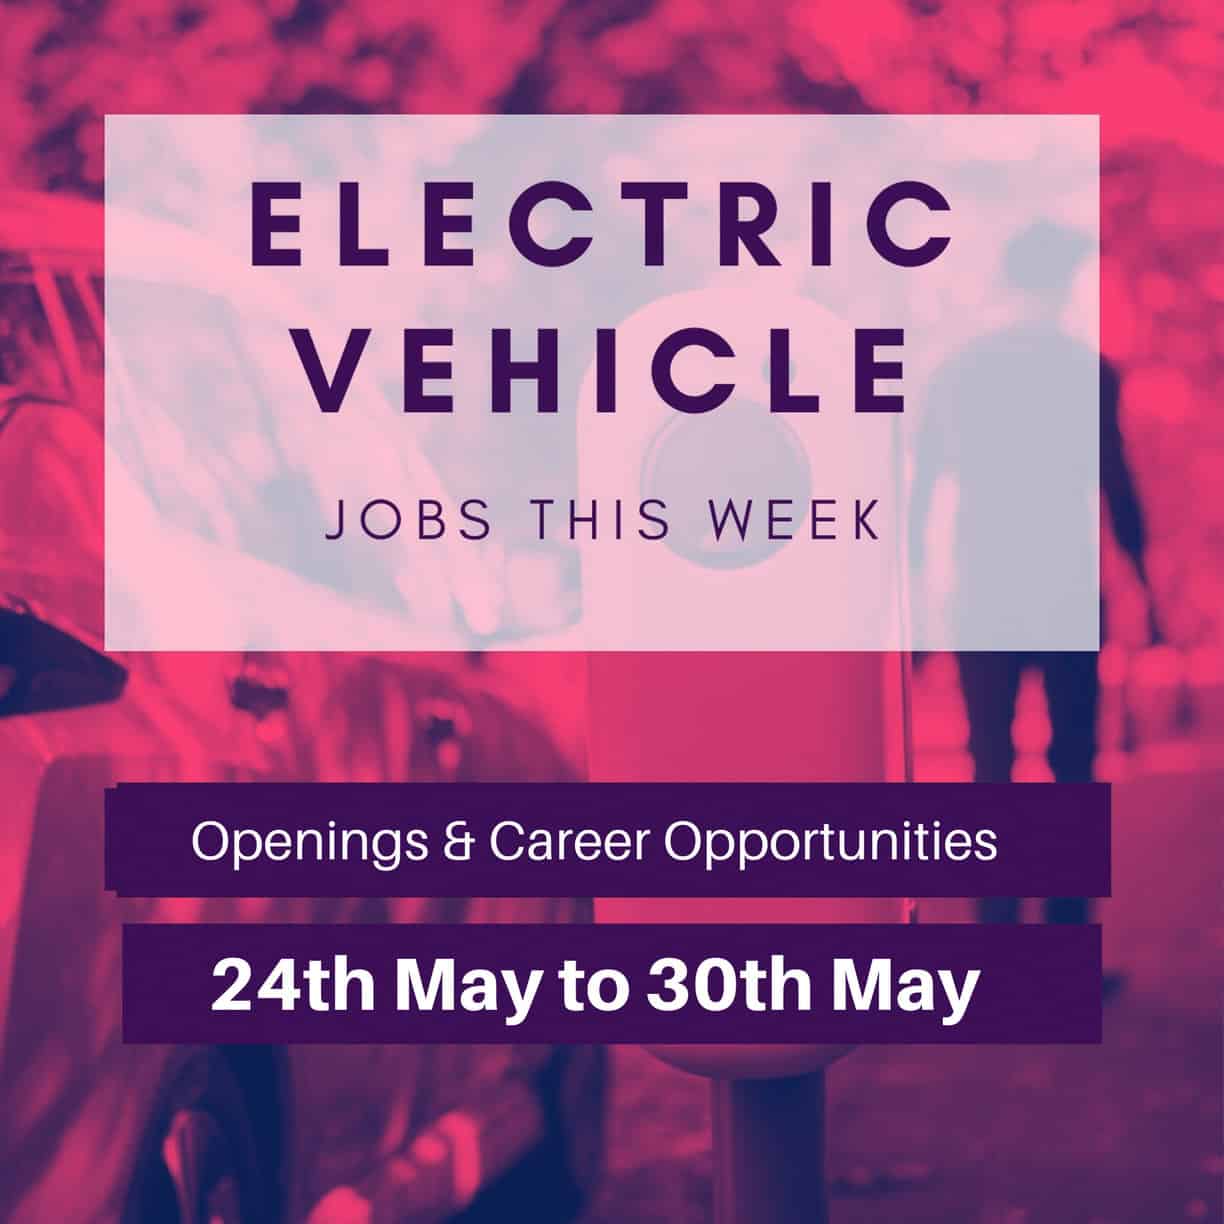 Electric Vehicle Jobs this Week - DIYguru | 13th April to 20th April 2020 (2)